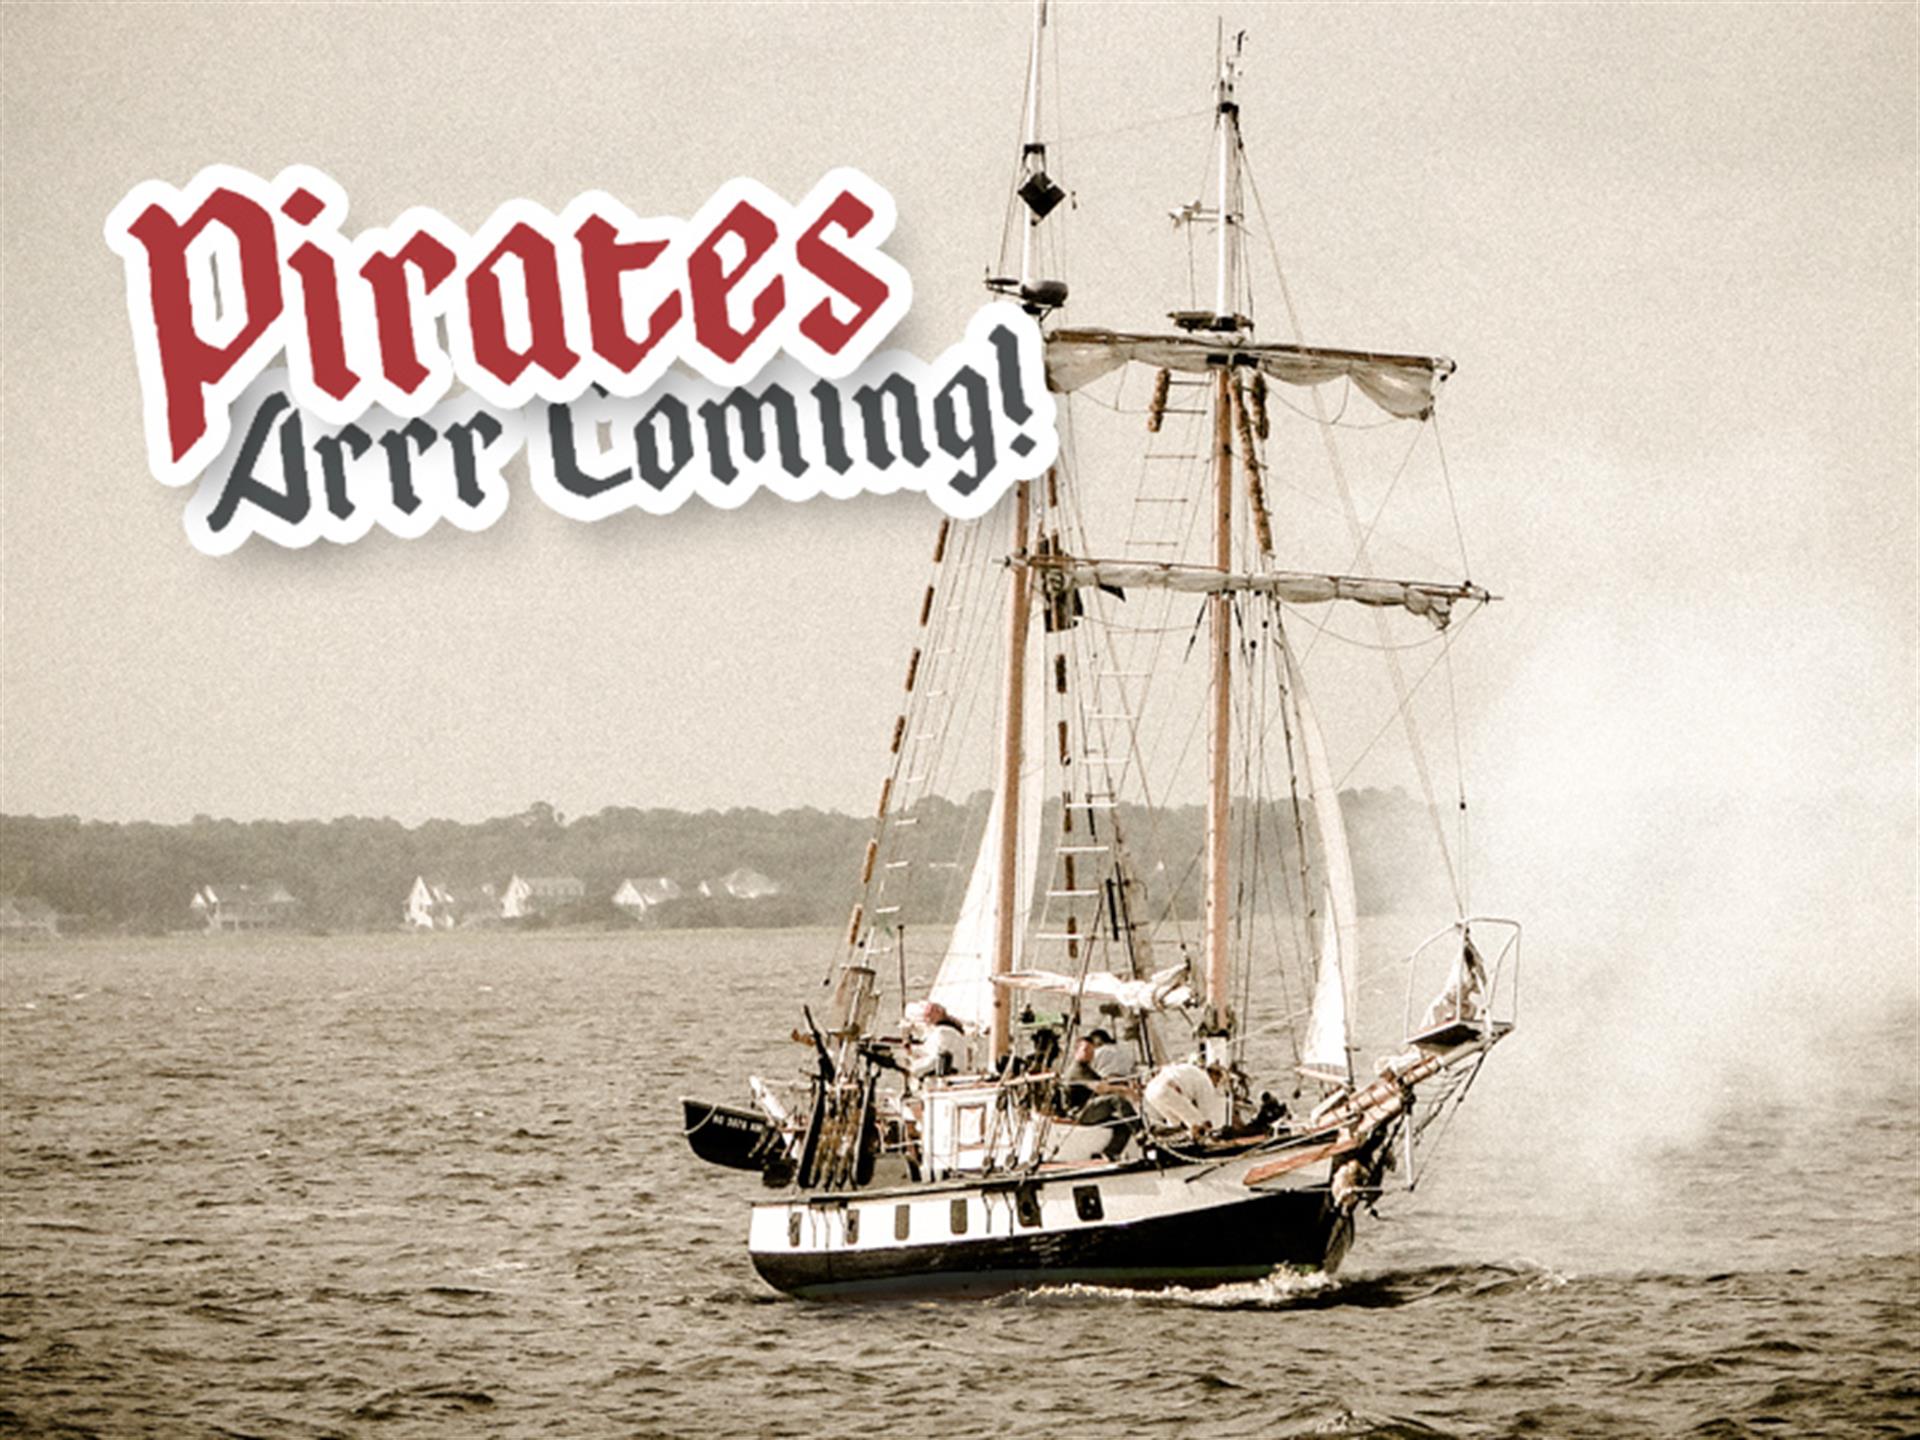 Pirates Arrr Coming